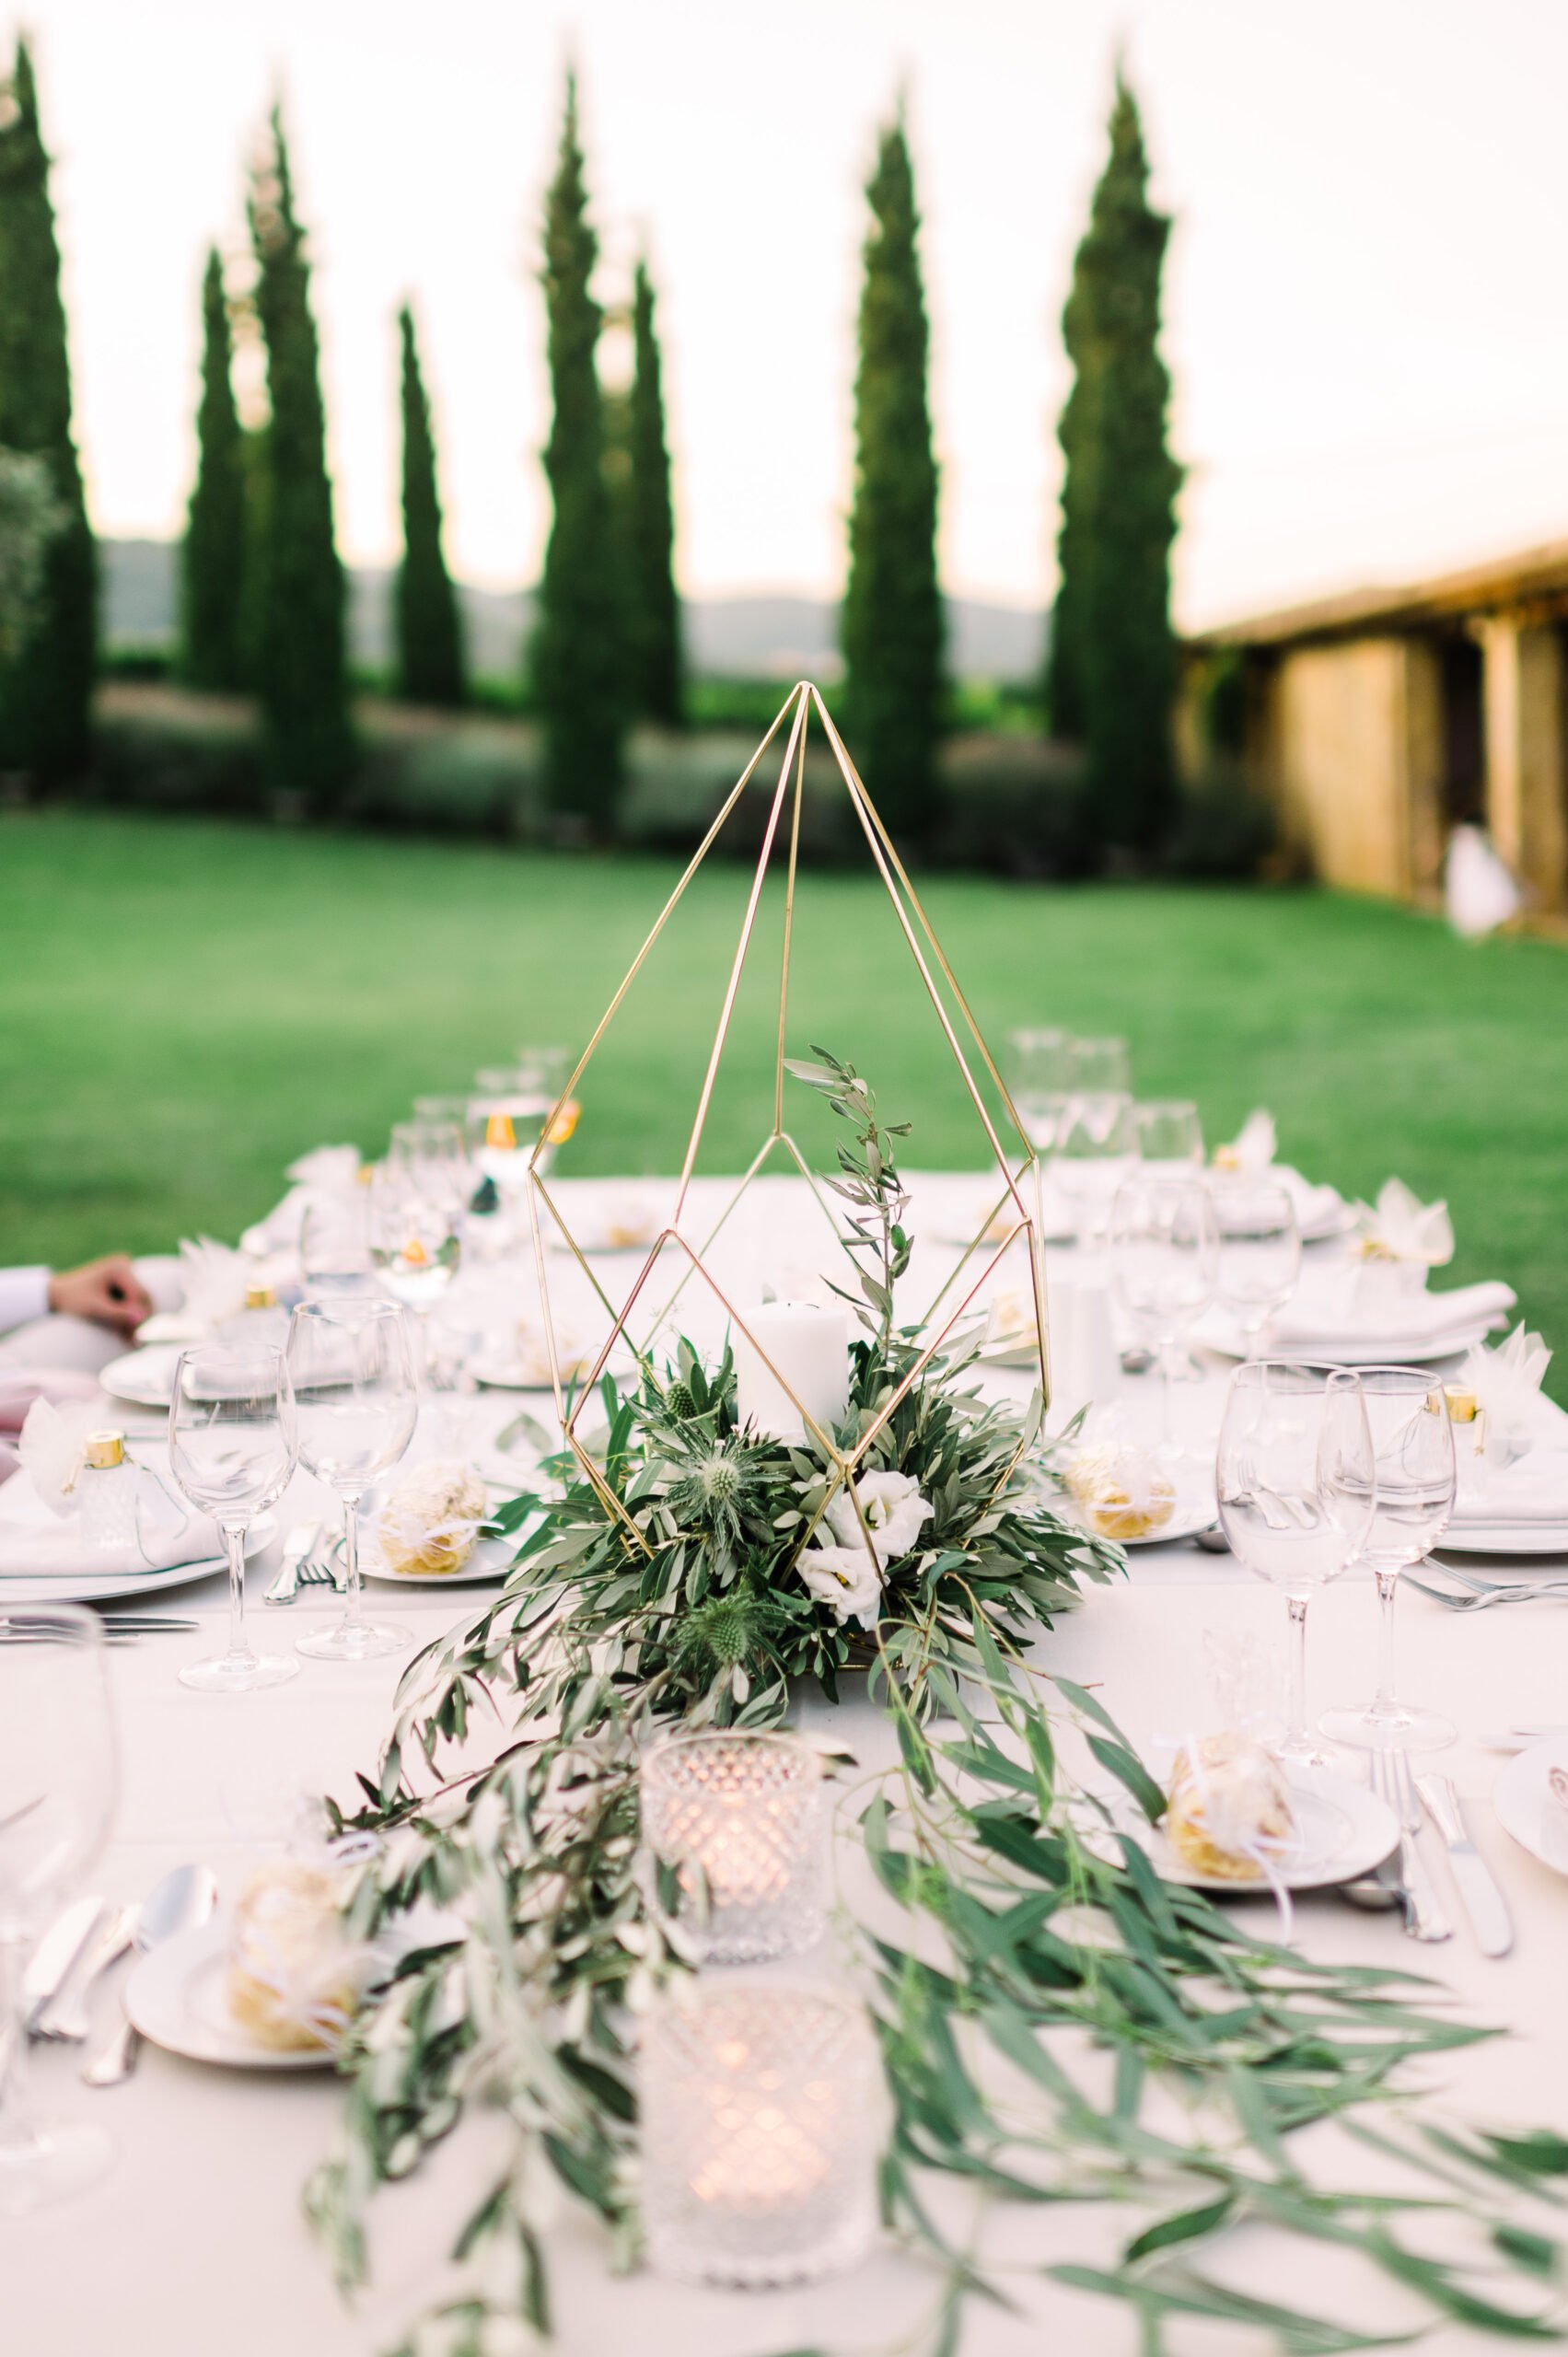 Centerpiece greenery style installation για το τραπέζι των καλεσμένων του γάμου